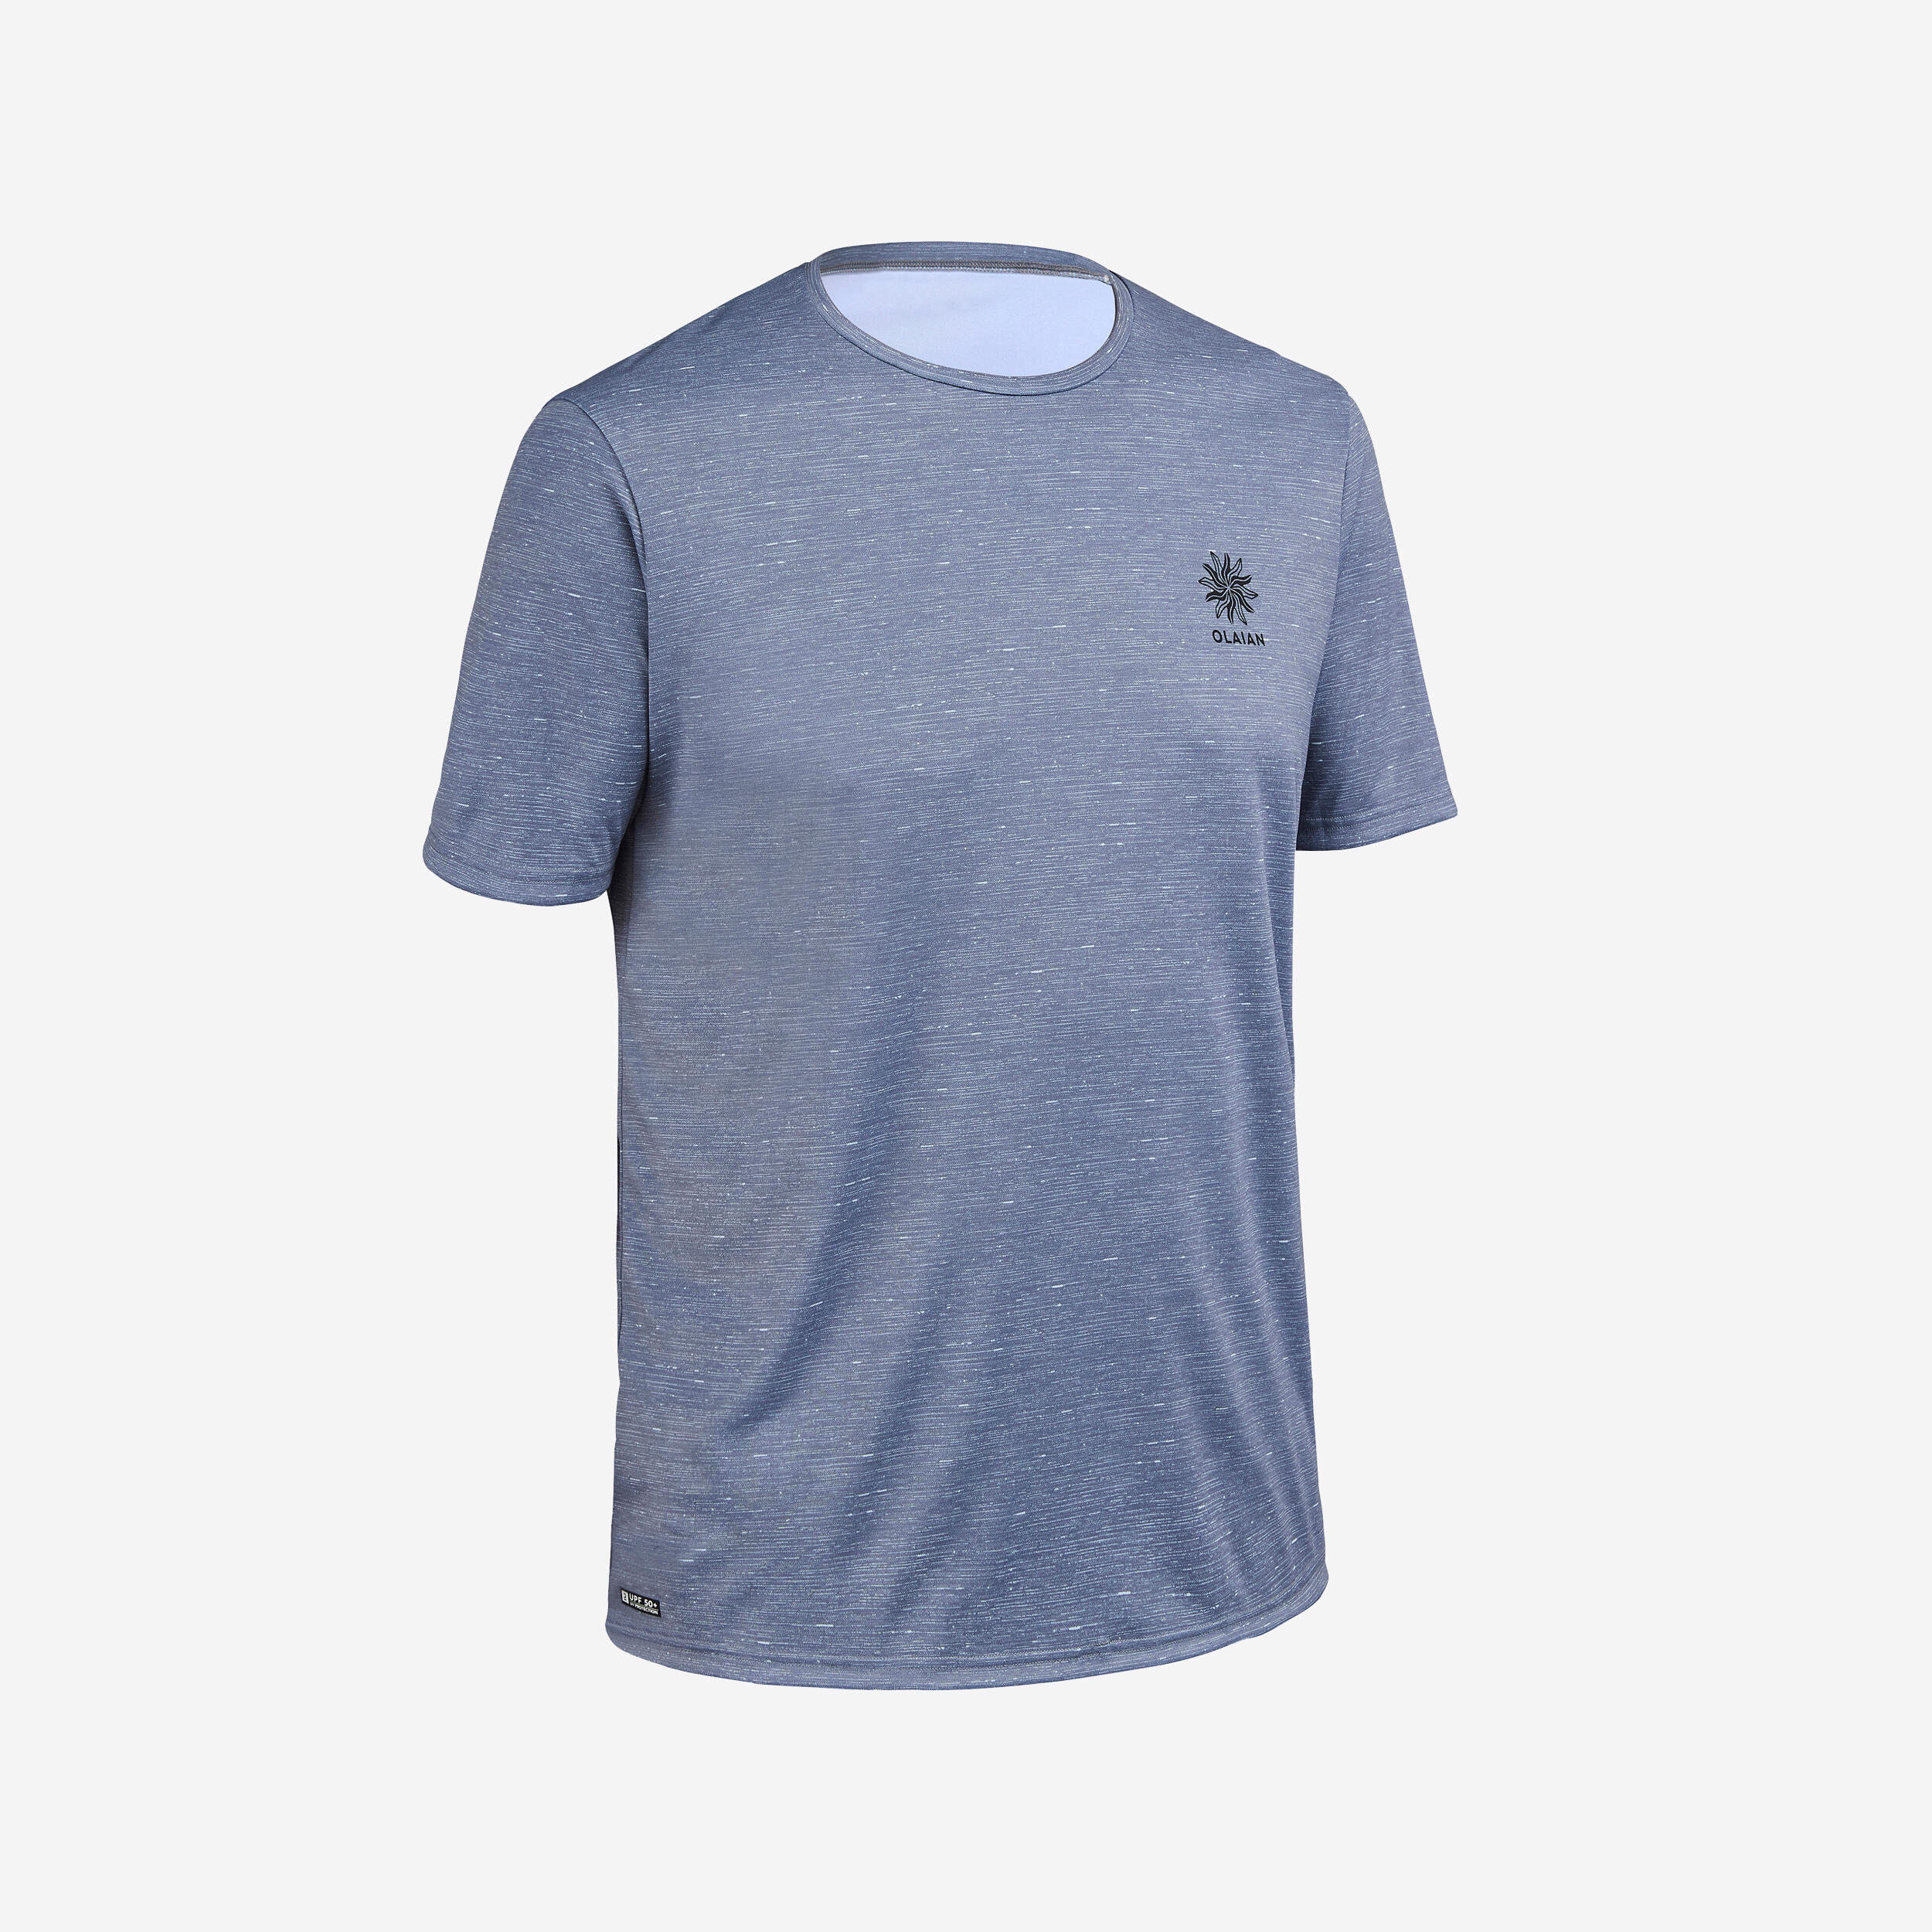 OLAIAN Men's Surfing Short-Sleeved Anti-UV T-Shirt - Grey print